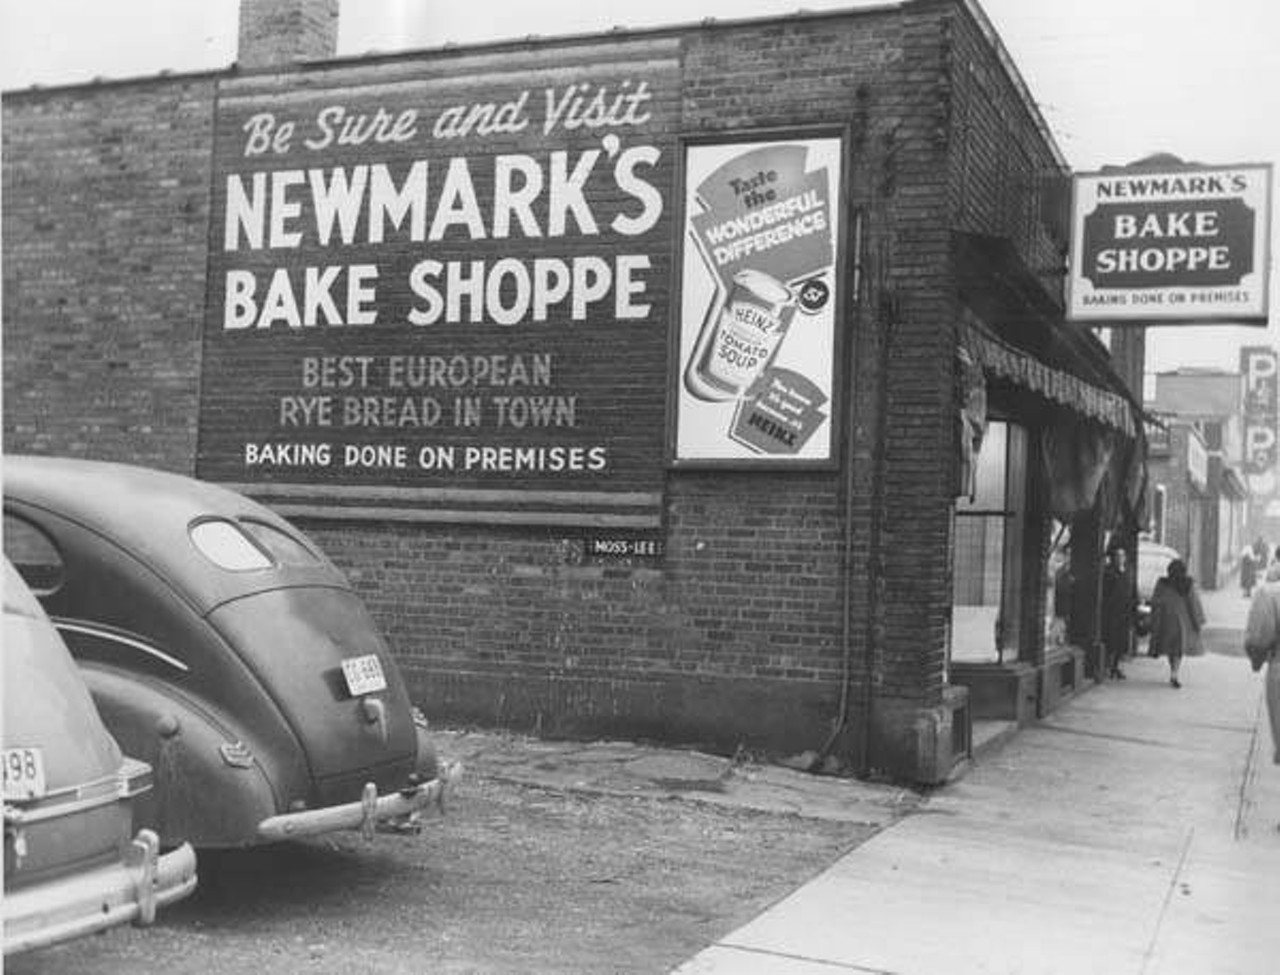  Newmark's Bake Shoppe, 1948 